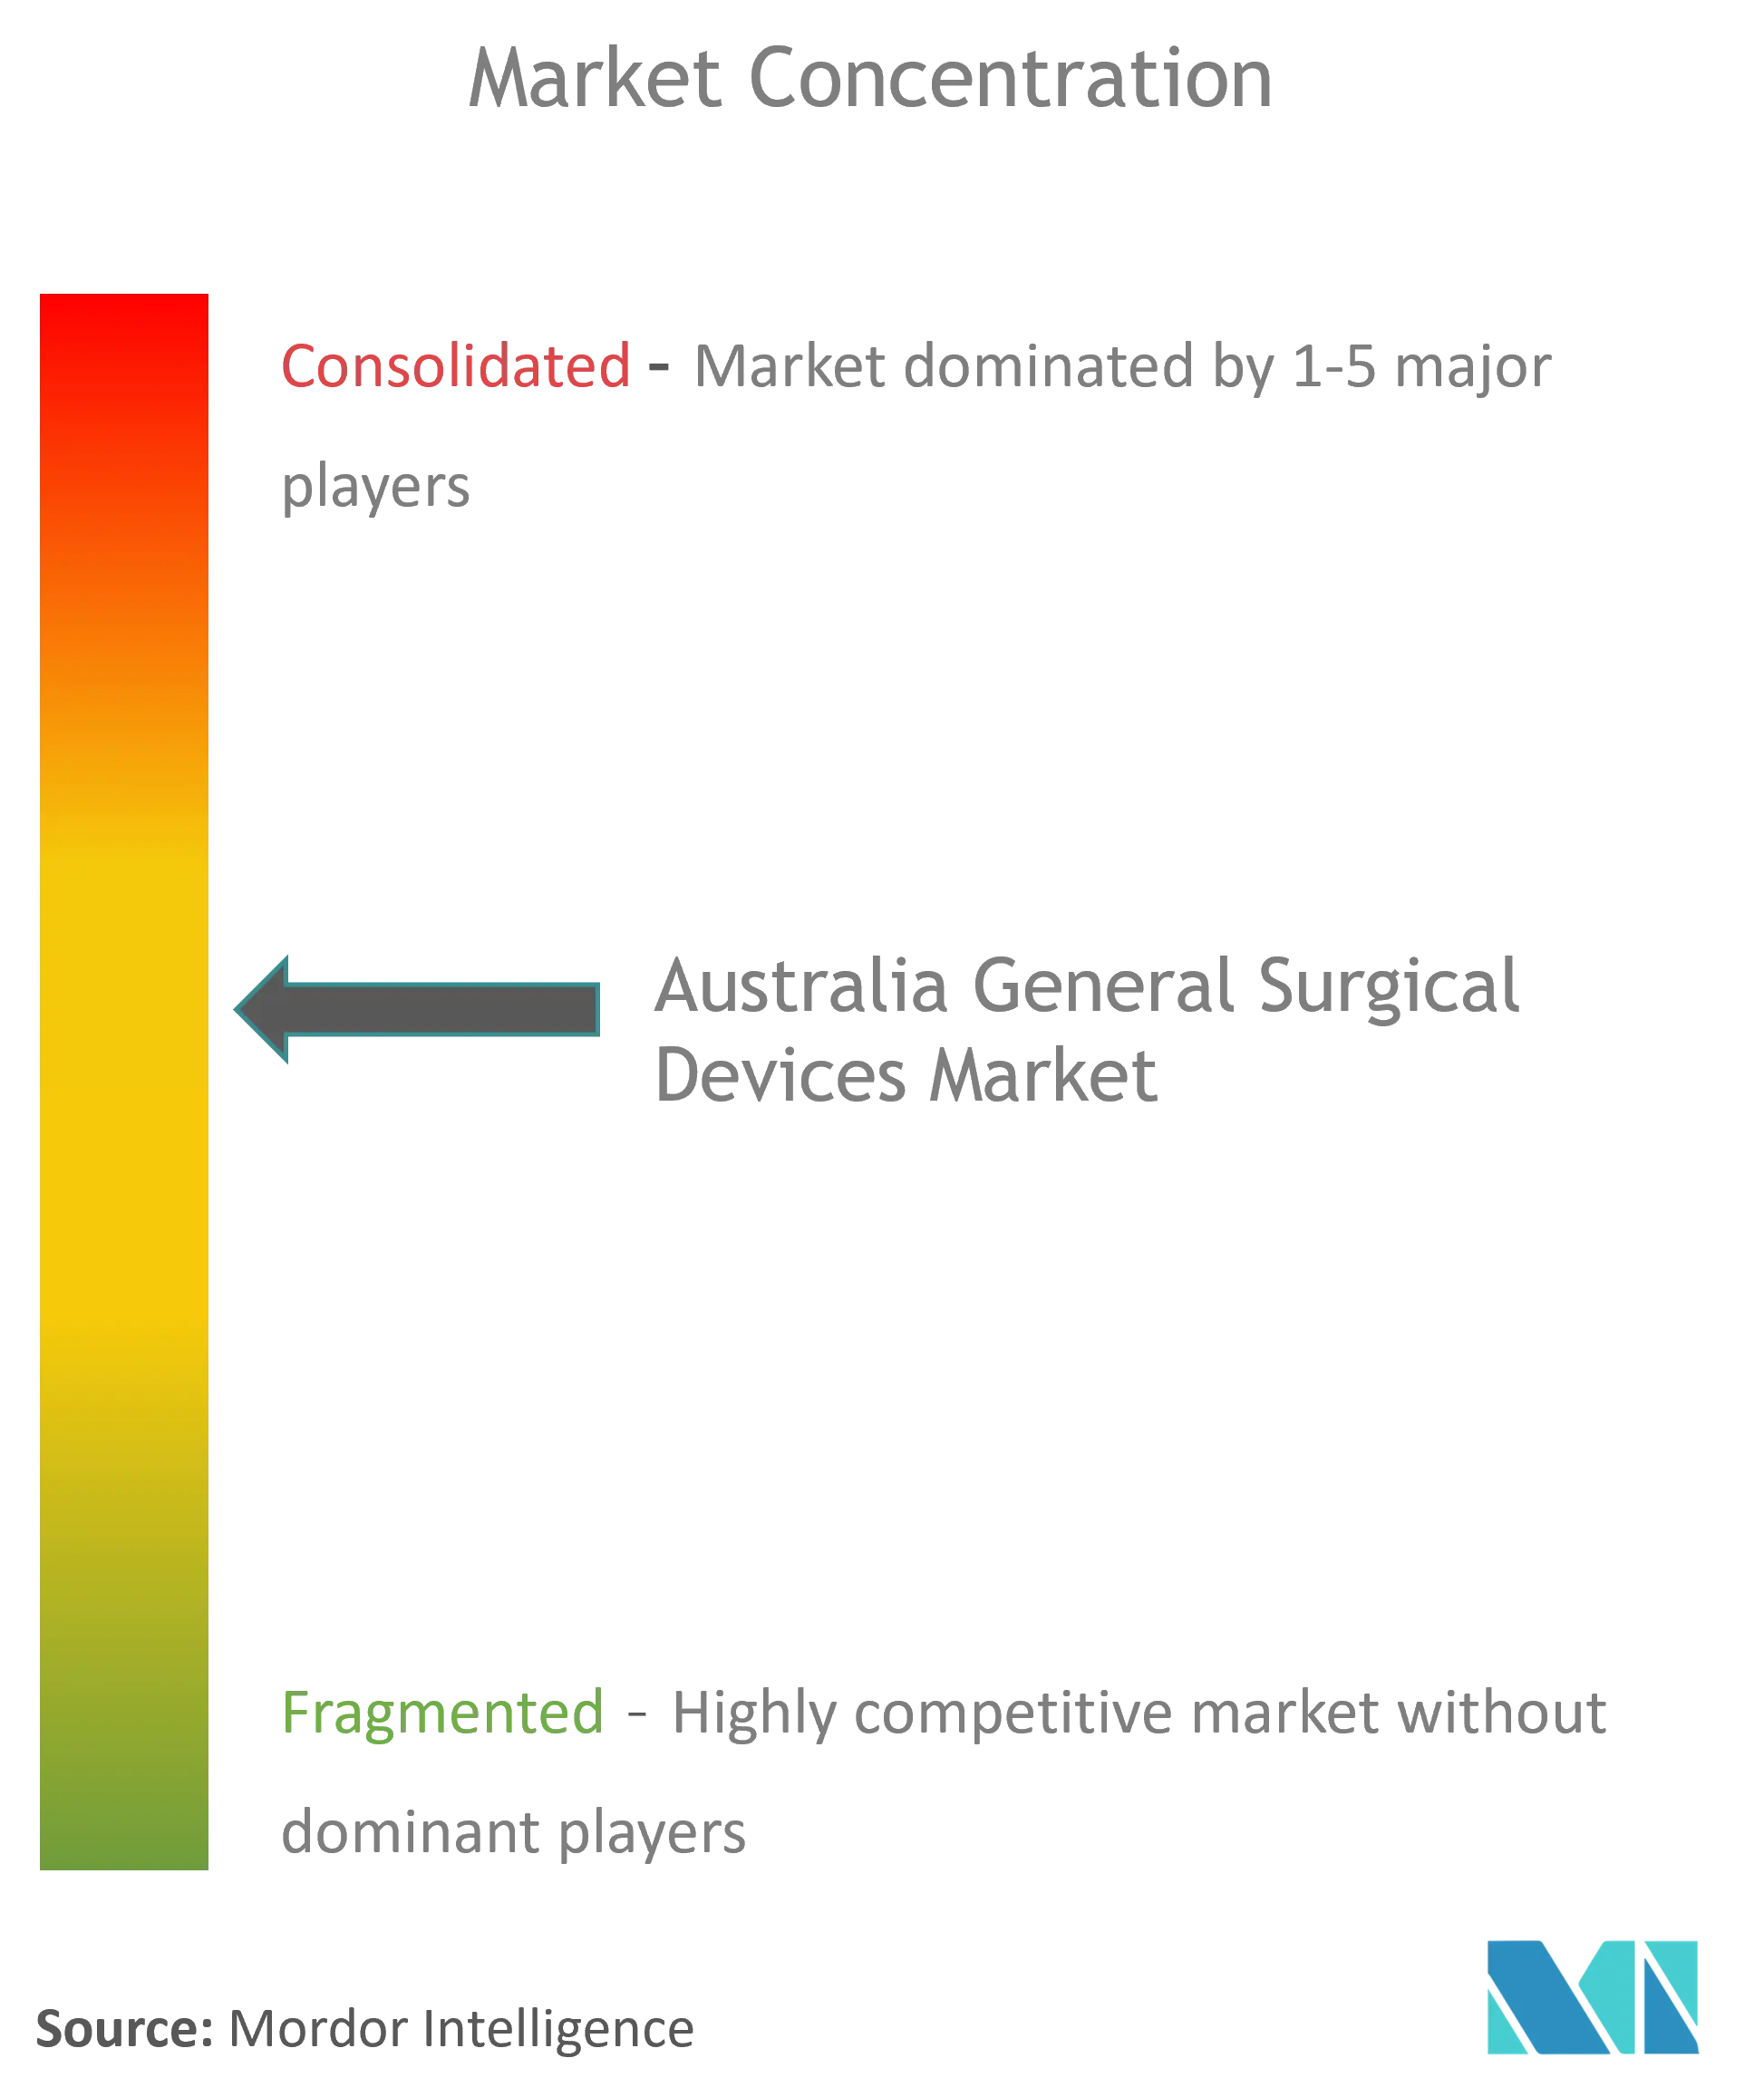 Australia General Surgical Devices Market Concentration